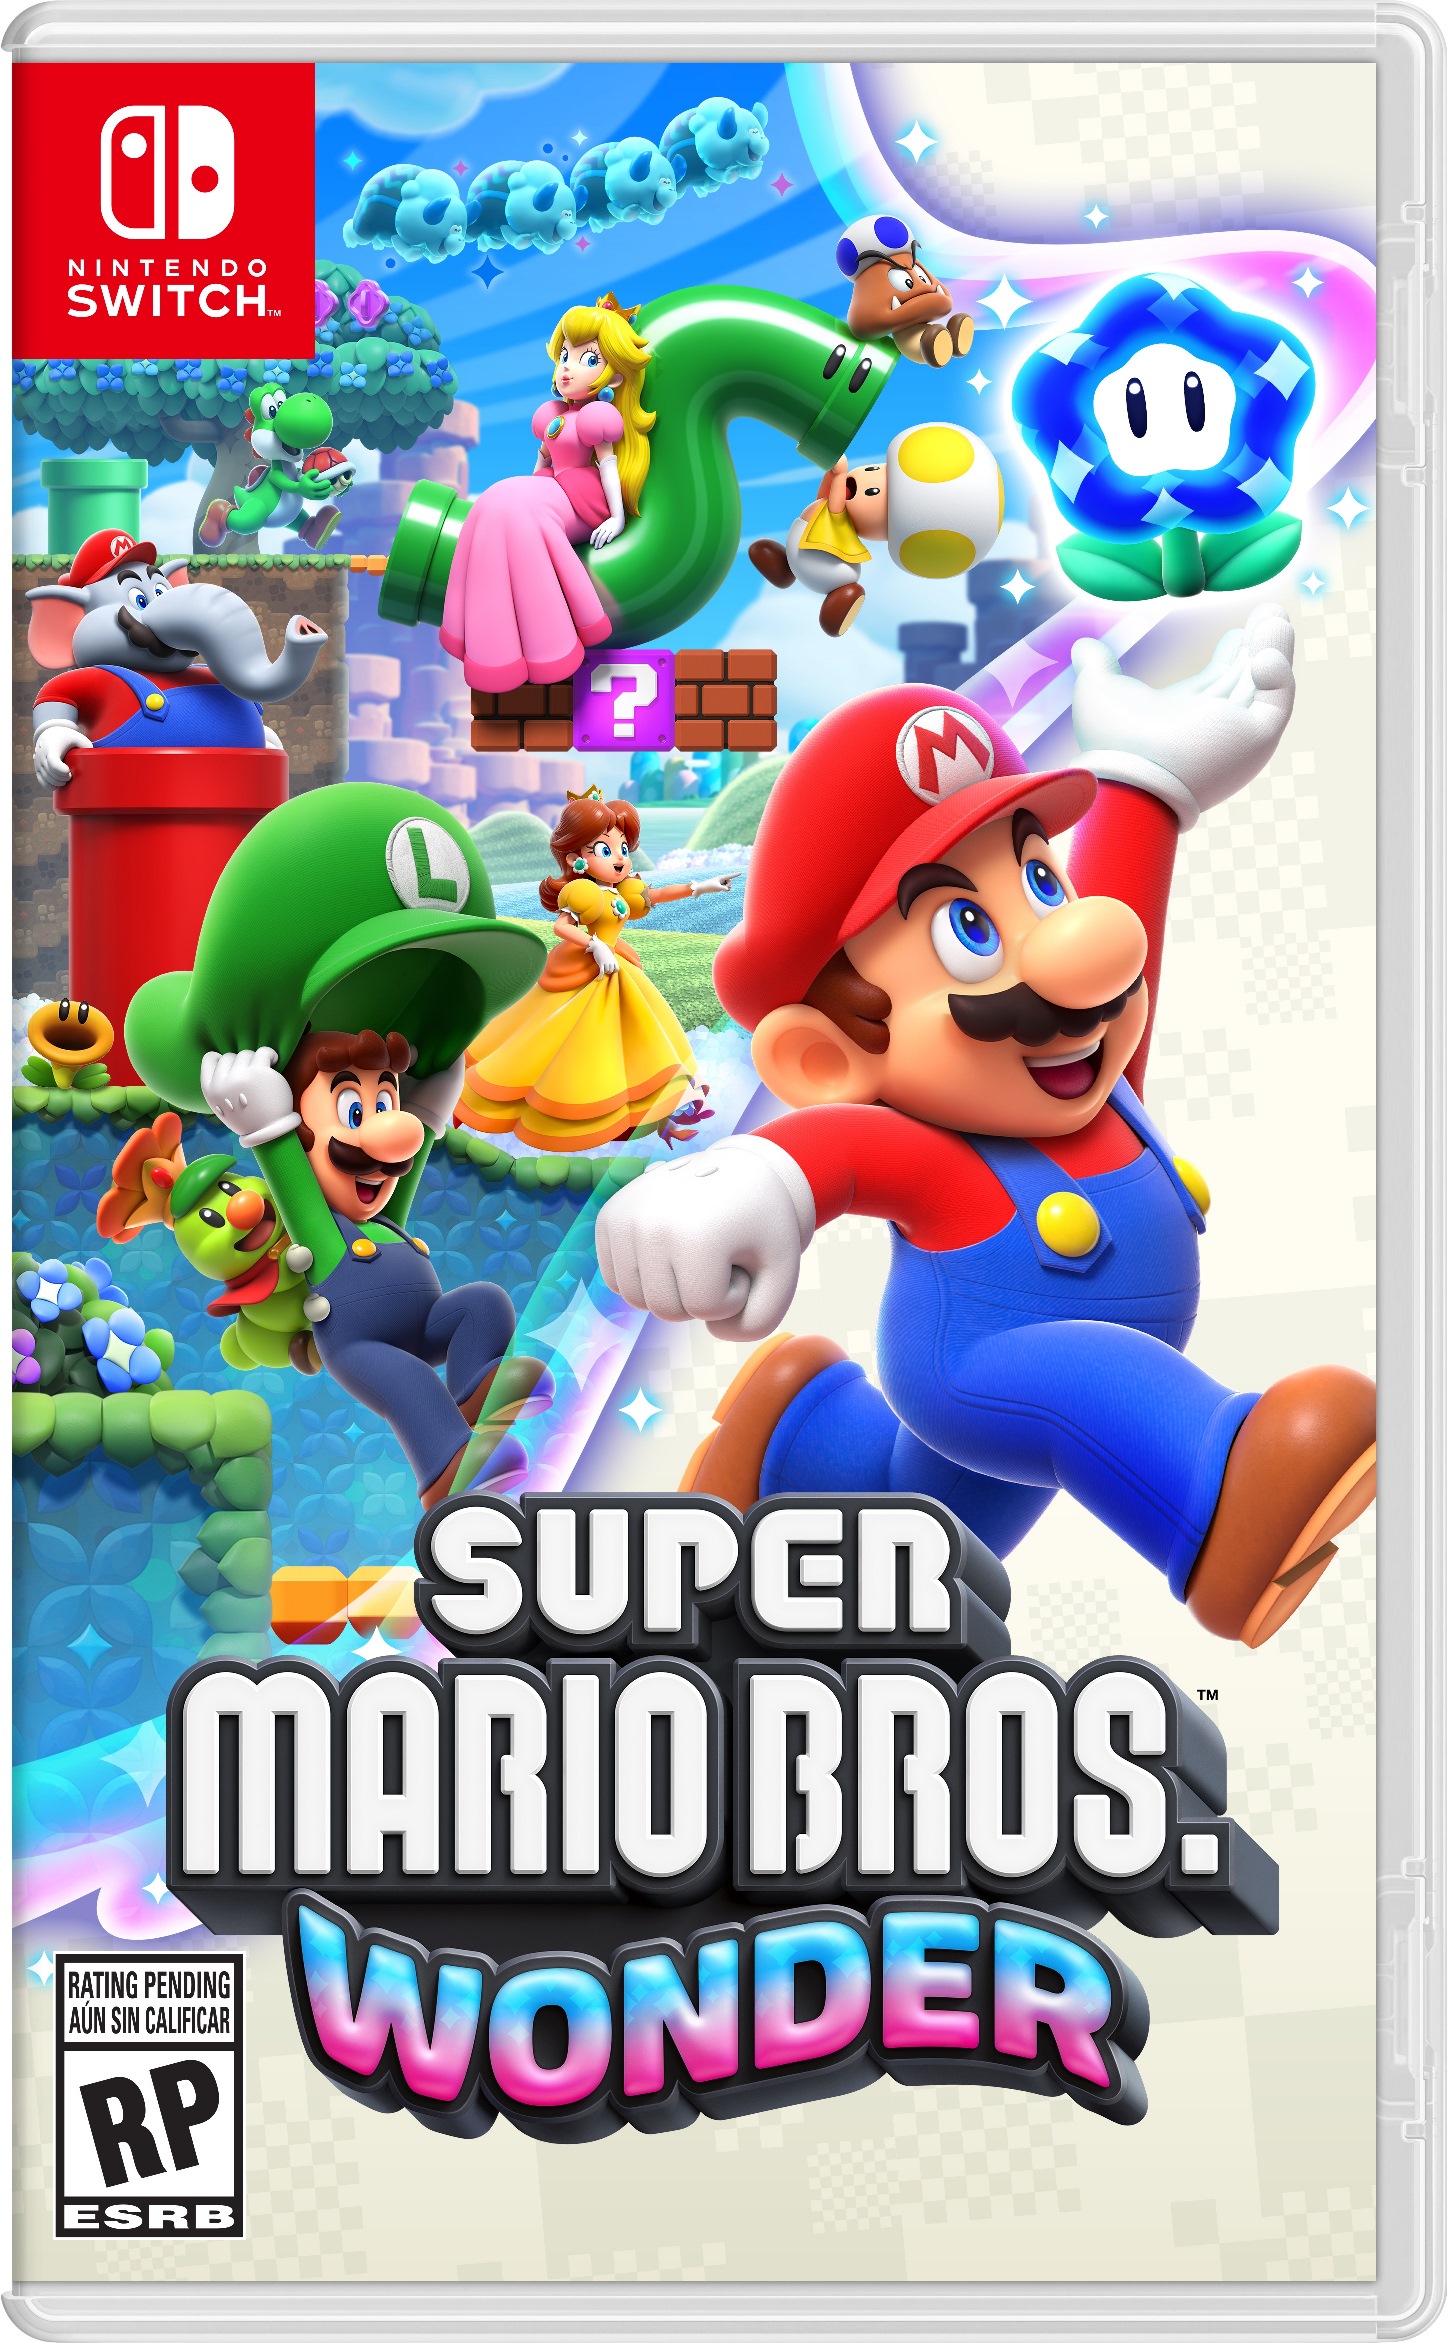 Super Mario Bros. Wonder boxart, screenshots